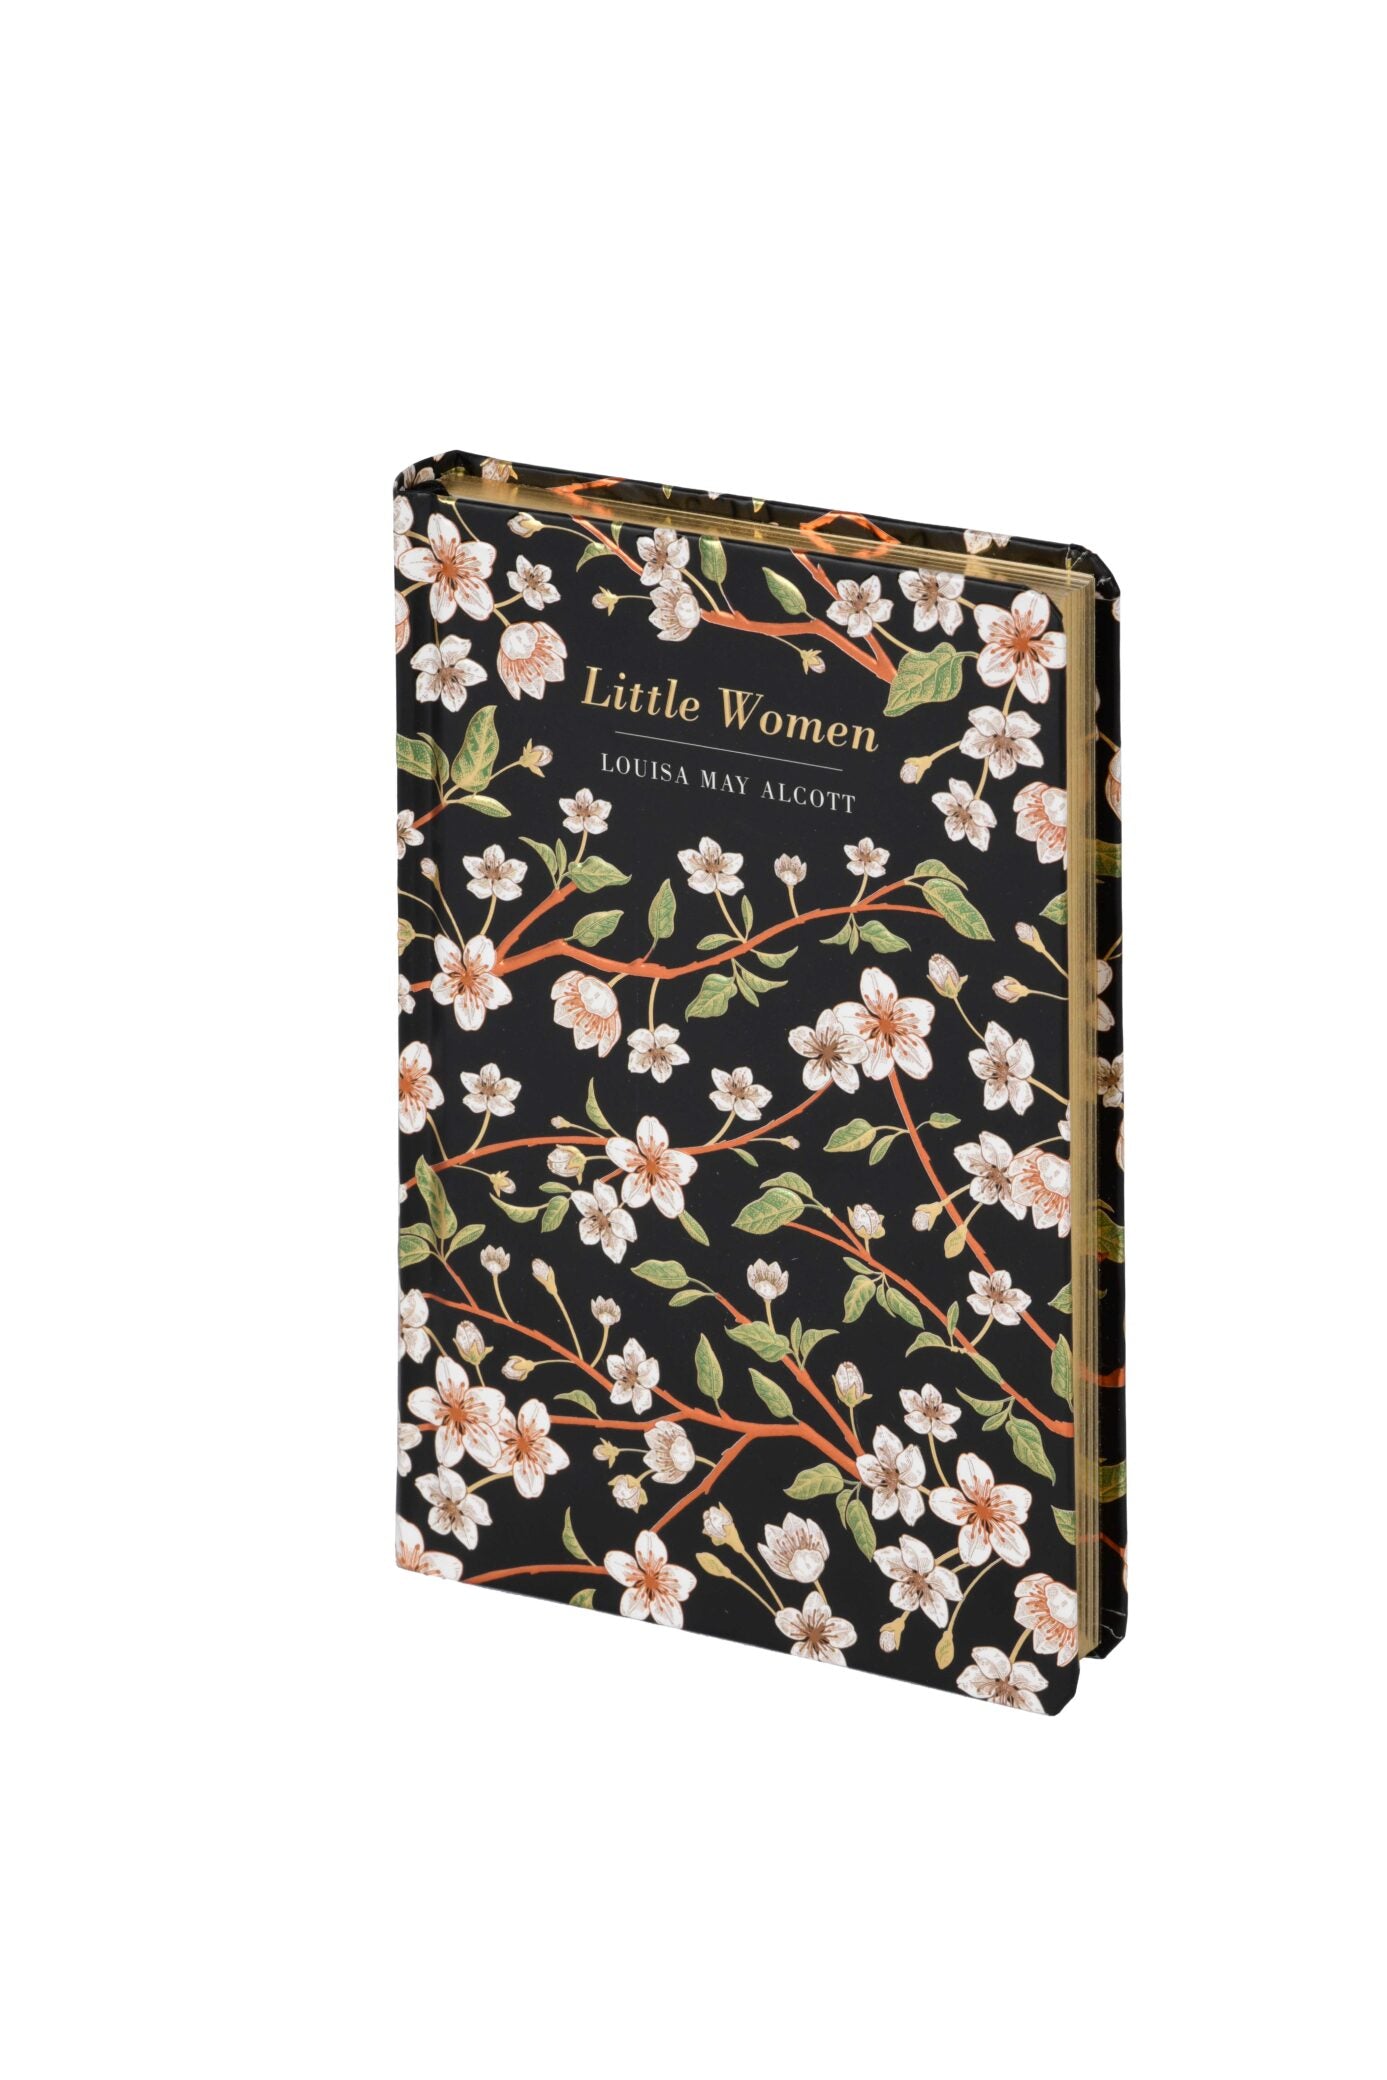 Little Women by Louisa May Alcott (Chiltern Classic)